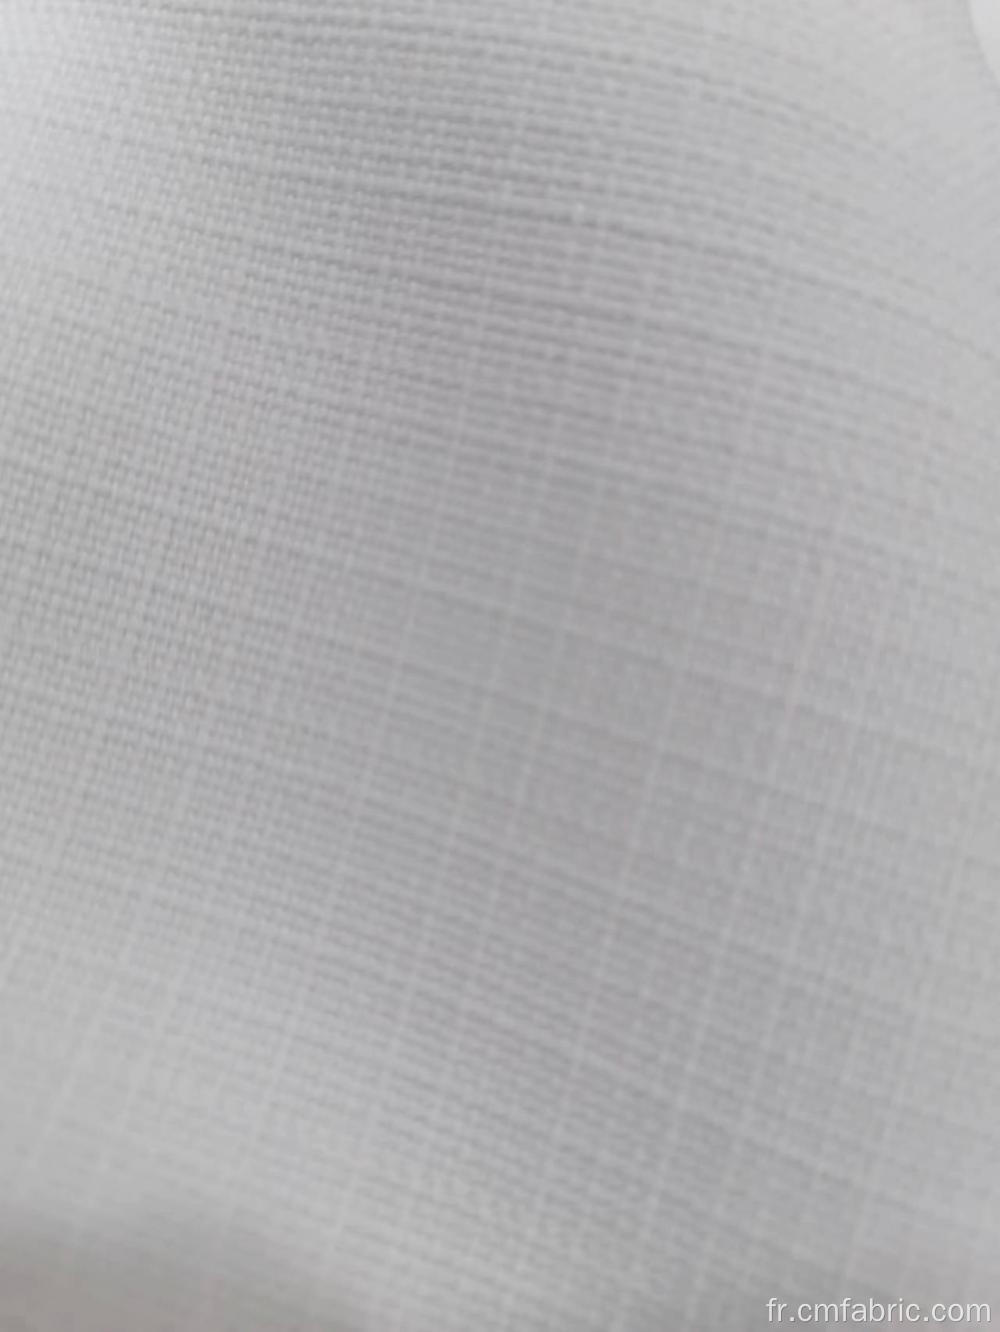 Polyester rayonne spandex slub imiter le tissu en linge